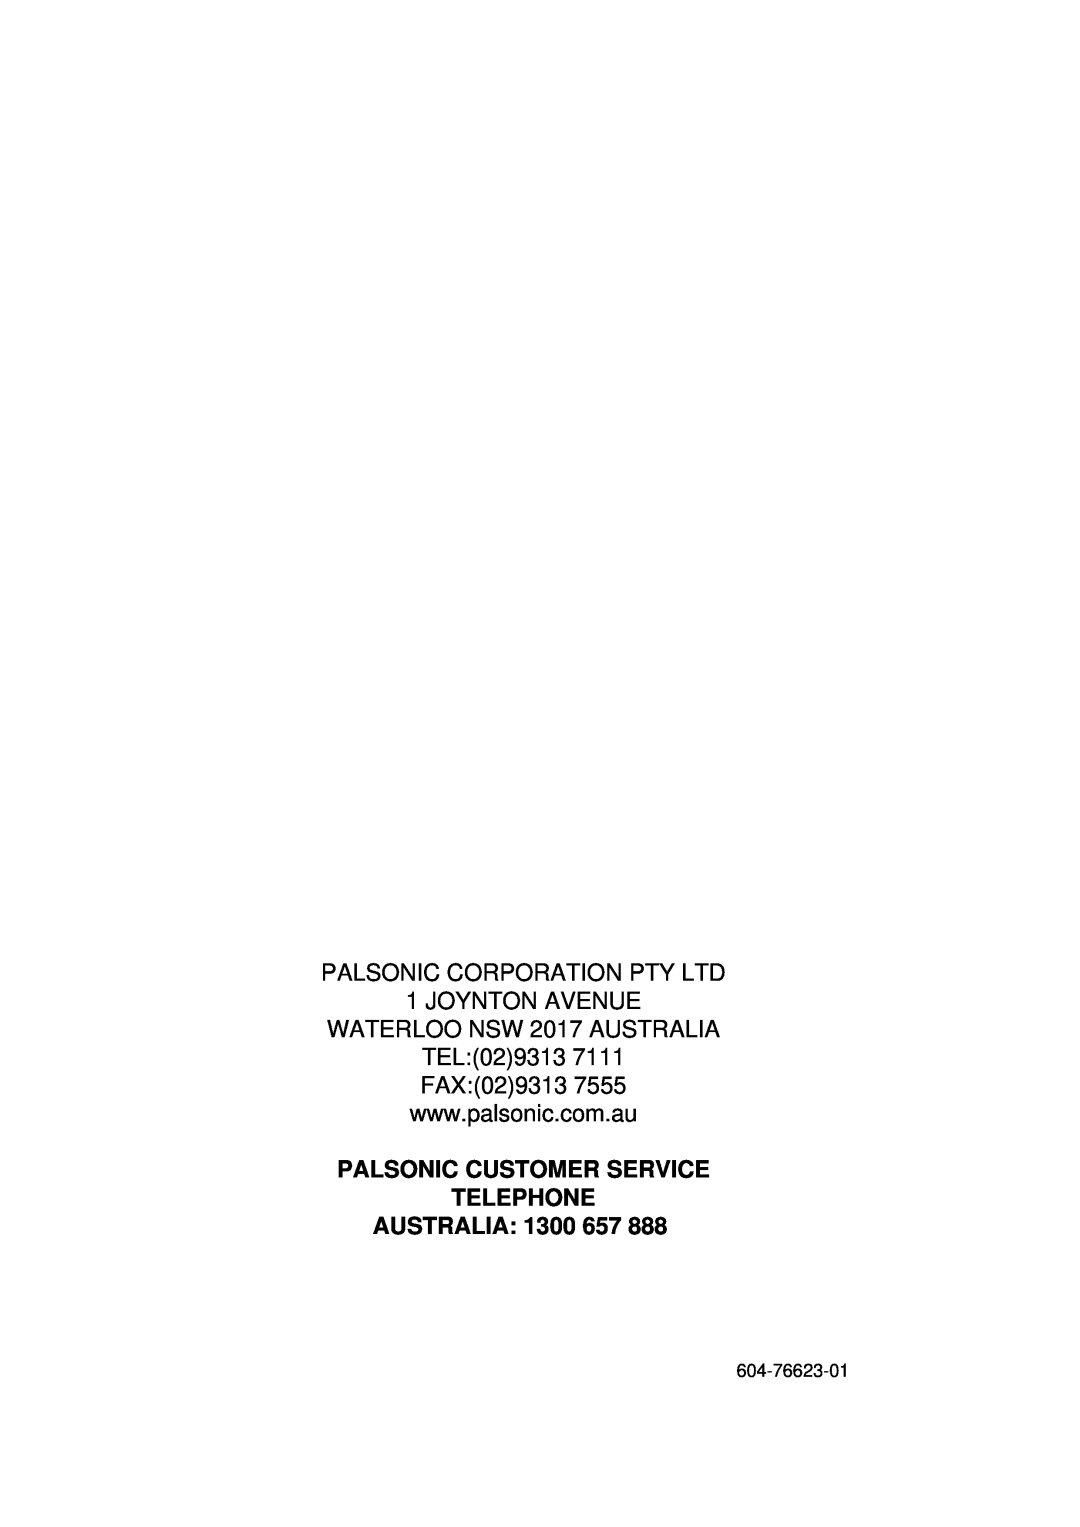 Palsonic 7118 PALSONIC CUSTOMER SERVICE TELEPHONE AUSTRALIA 1300 657, JOYNTON AVENUE WATERLOO NSW 2017 AUSTRALIA TEL029313 